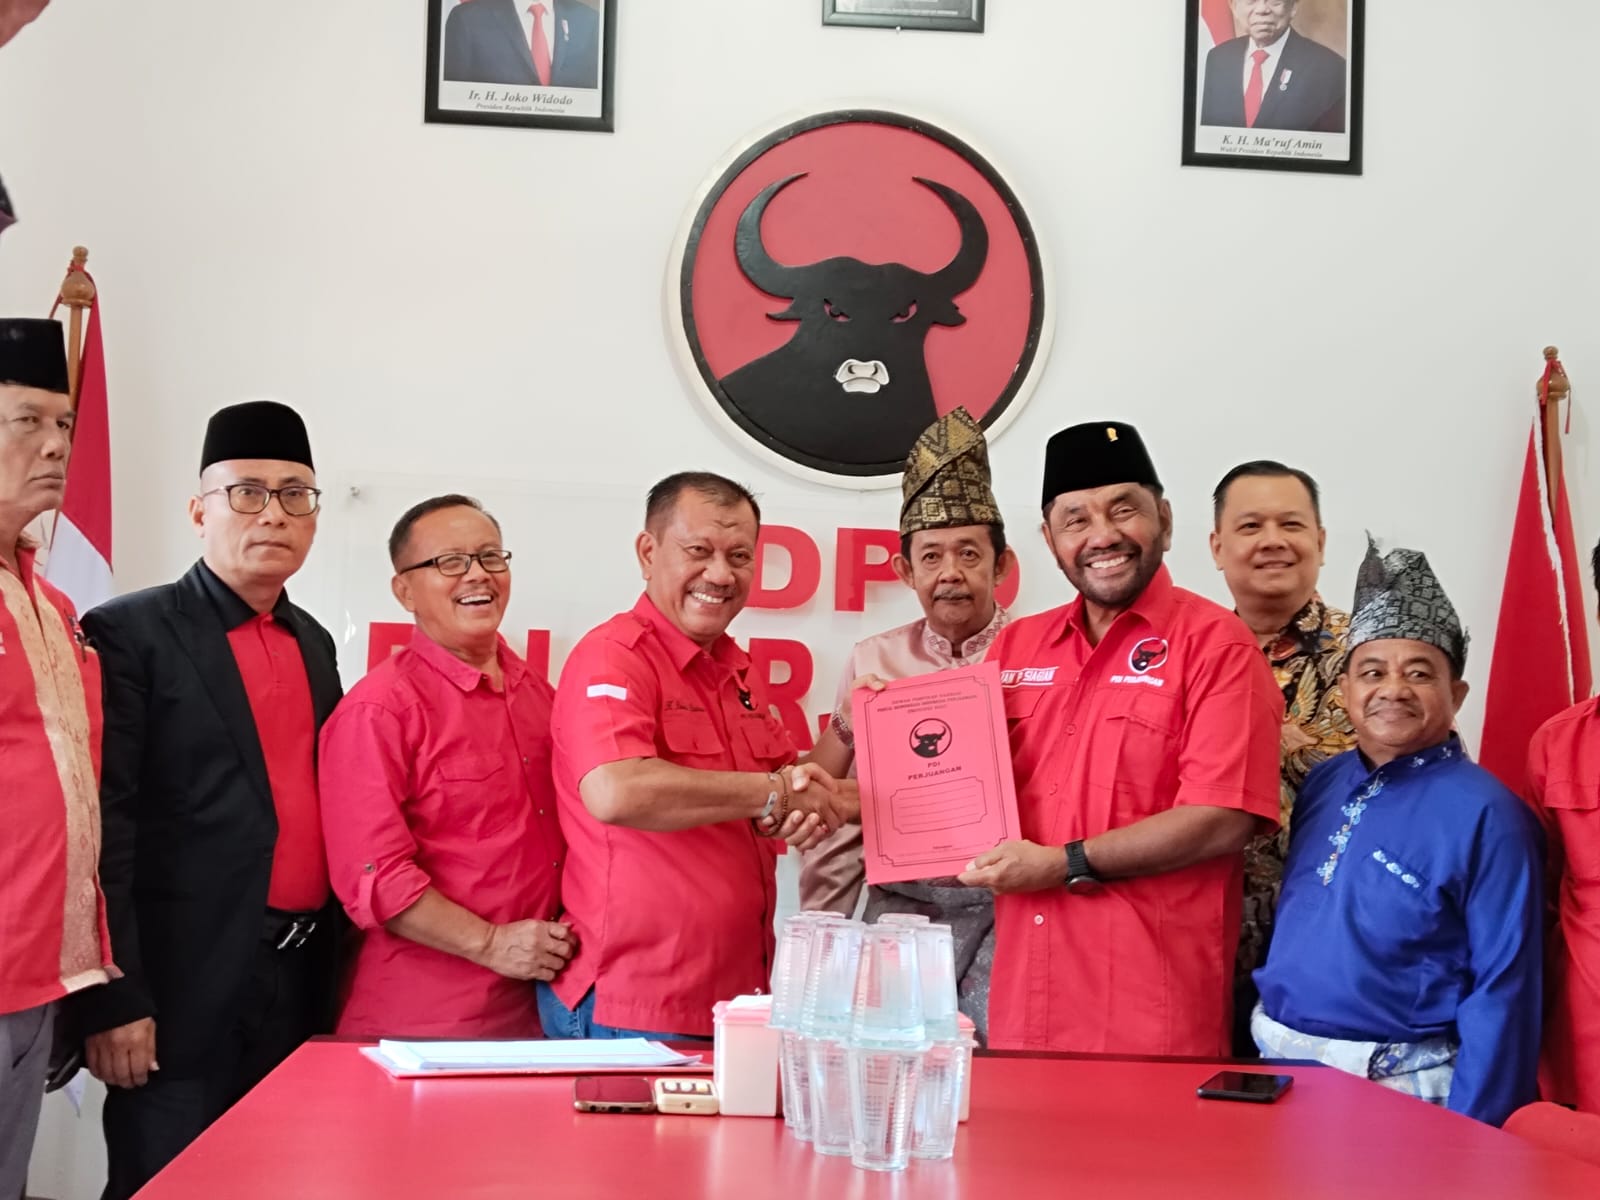 Ian Siagian Resmi Serahkan Berkas Pendaftaran Bakal Calon Gubernur, Modal Kuat 11 Kursi PDI Perjuangan di DPRD Riau